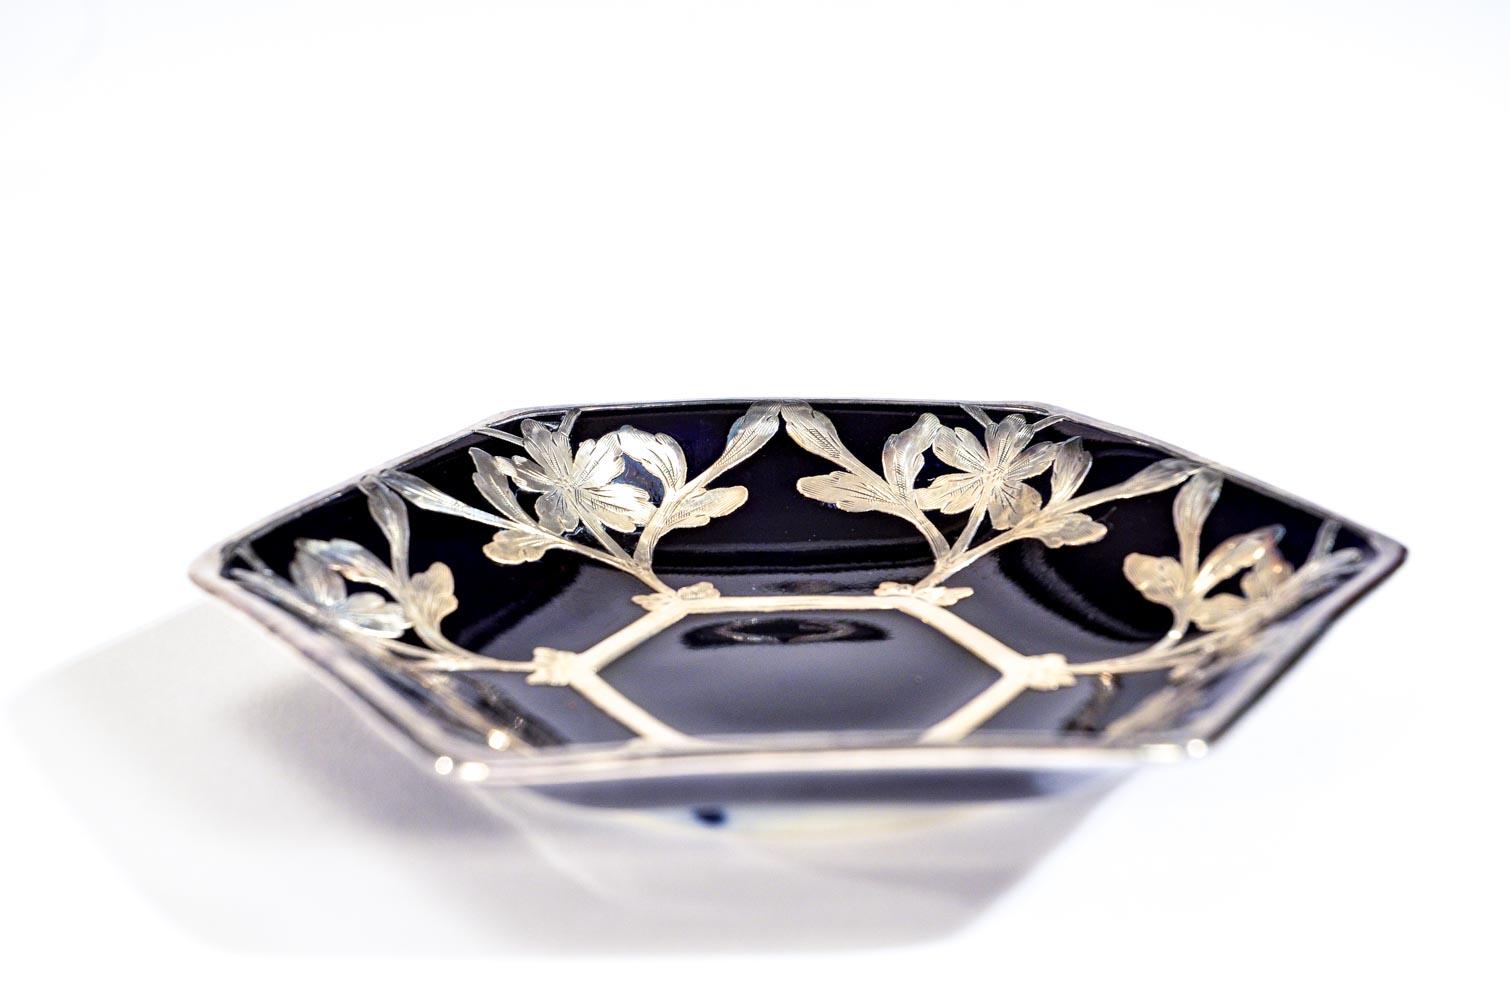 Set of 6 Lenox Art Nouveau Silver Overlay Cup & Saucers For Sale 1